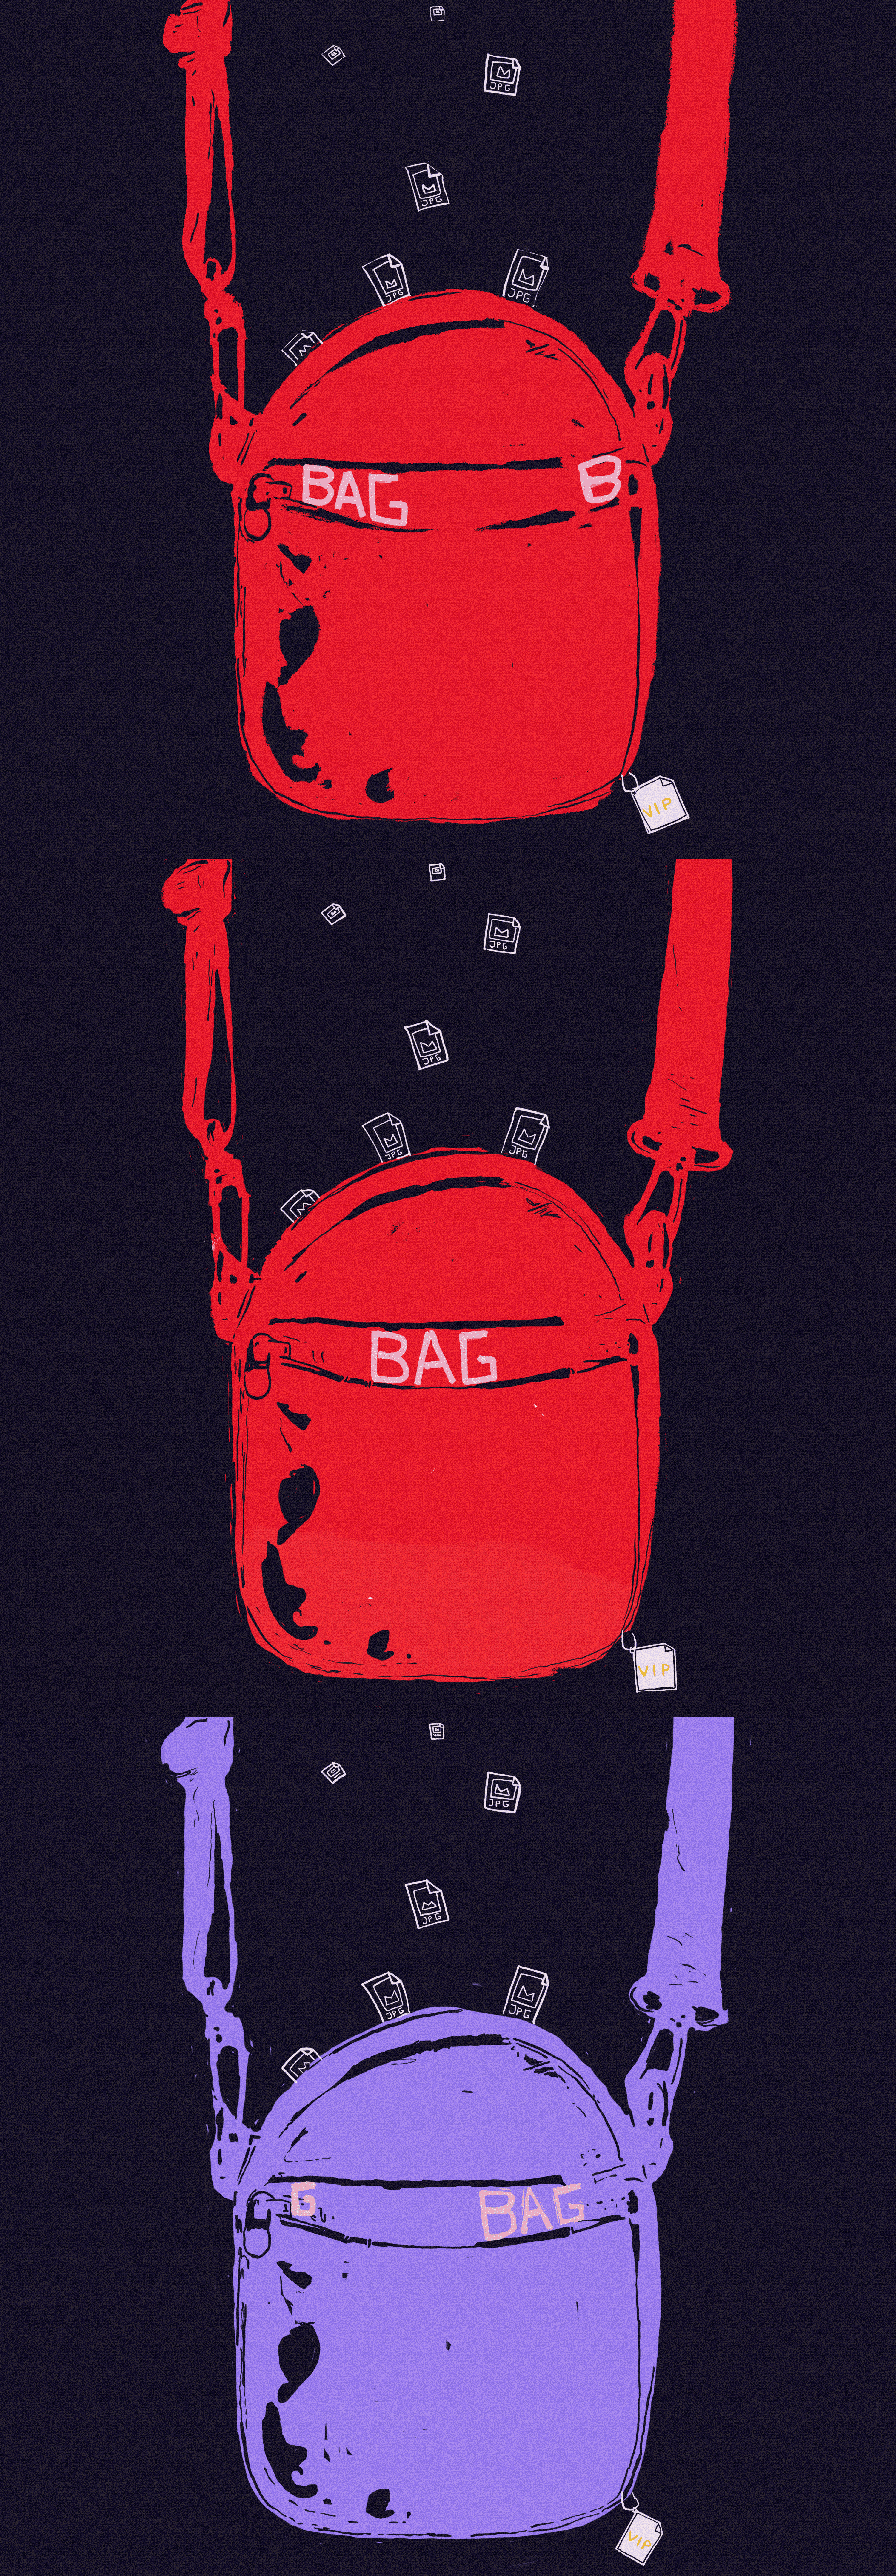 $BAG